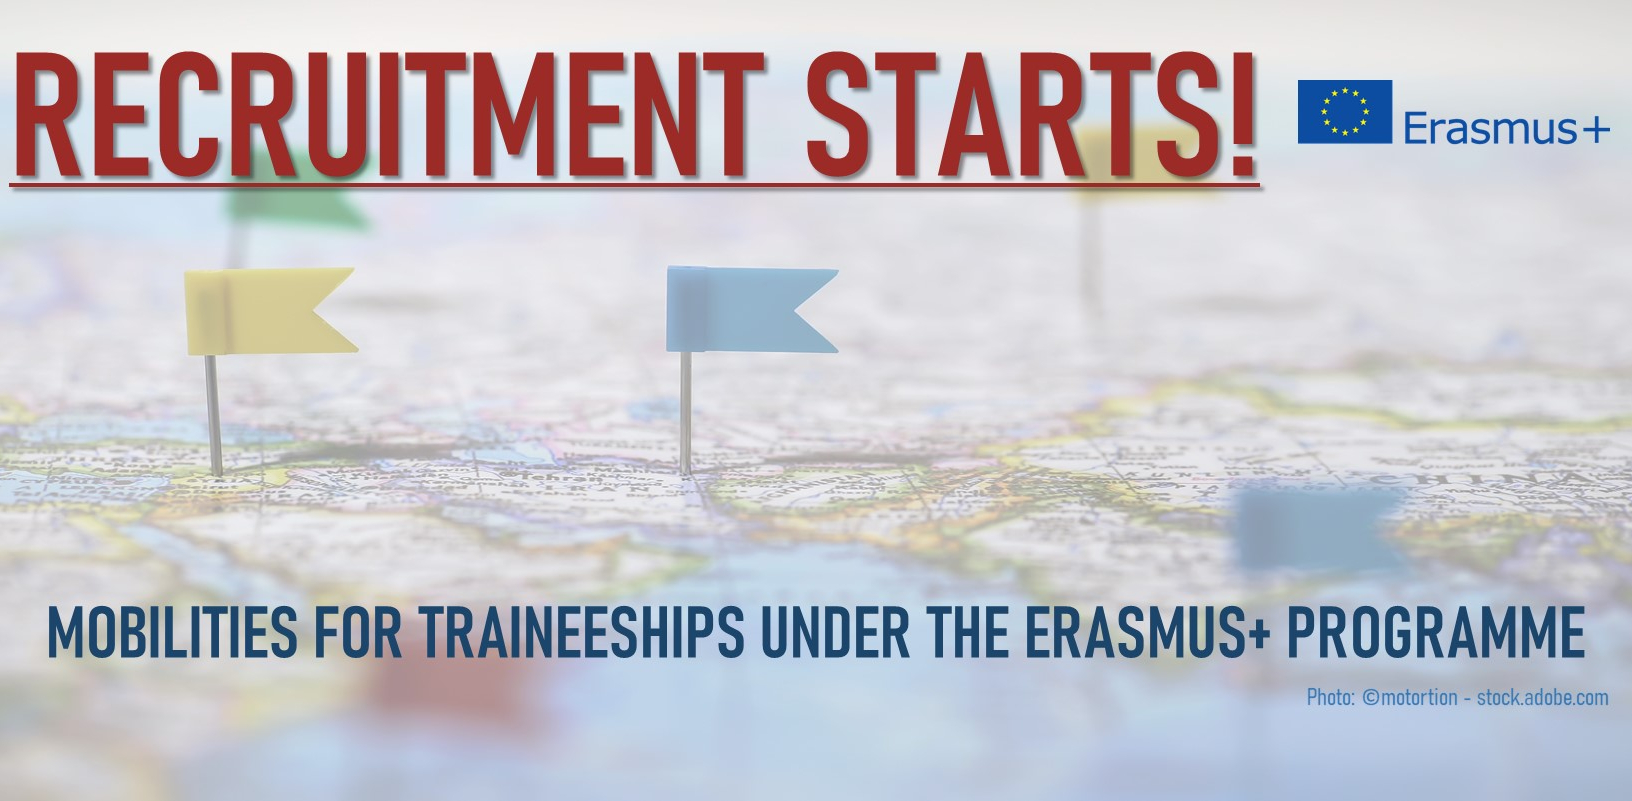 Zdjęcie: Erasmus plus Recruitments starts